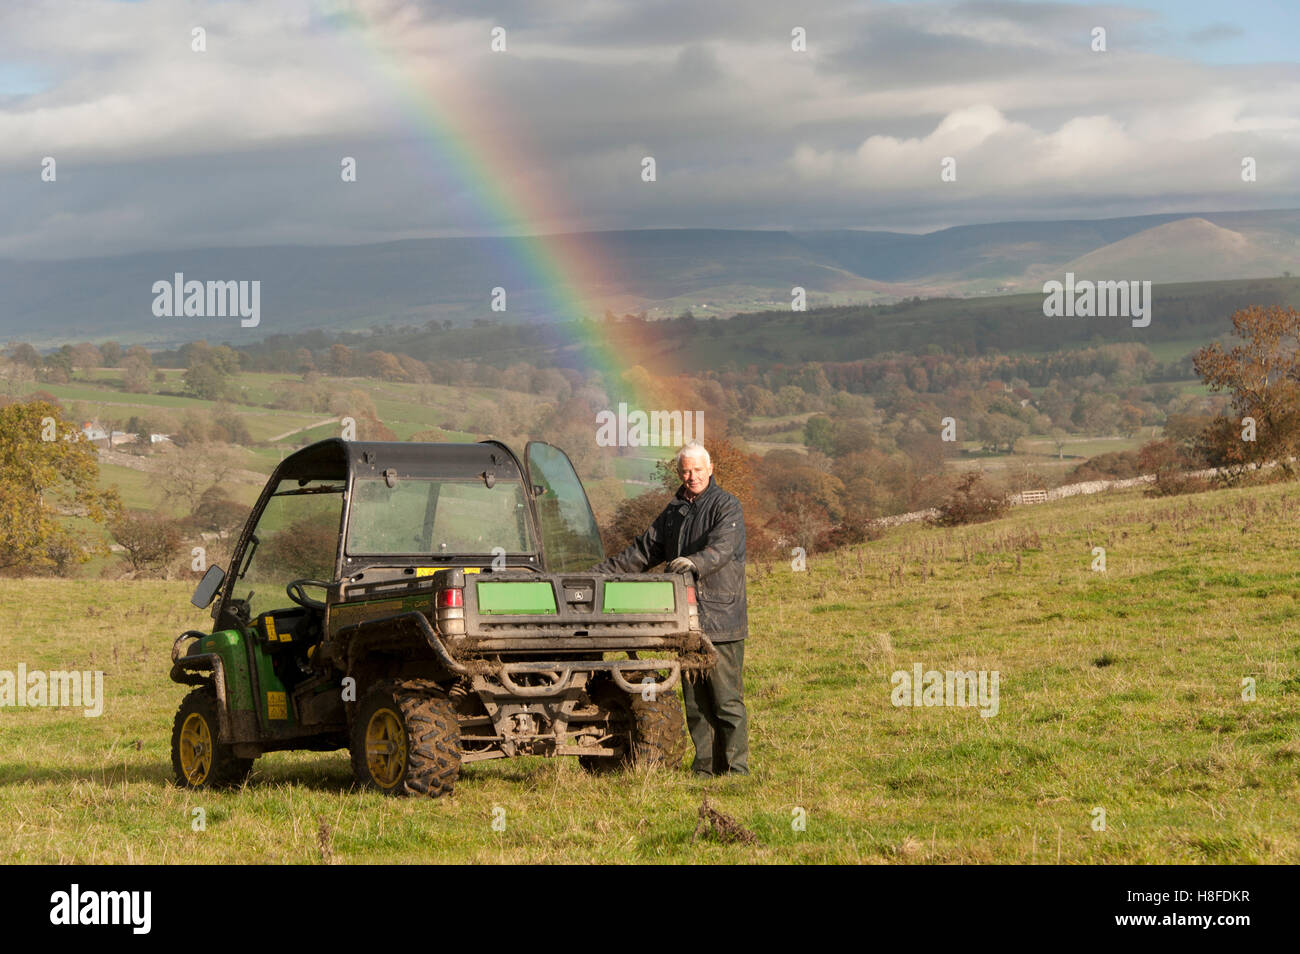 Los pastos de montaña en agricultor, apoyándose en un vehículo agrícola 4x4, con un arco iris detrás de él. Foto de stock